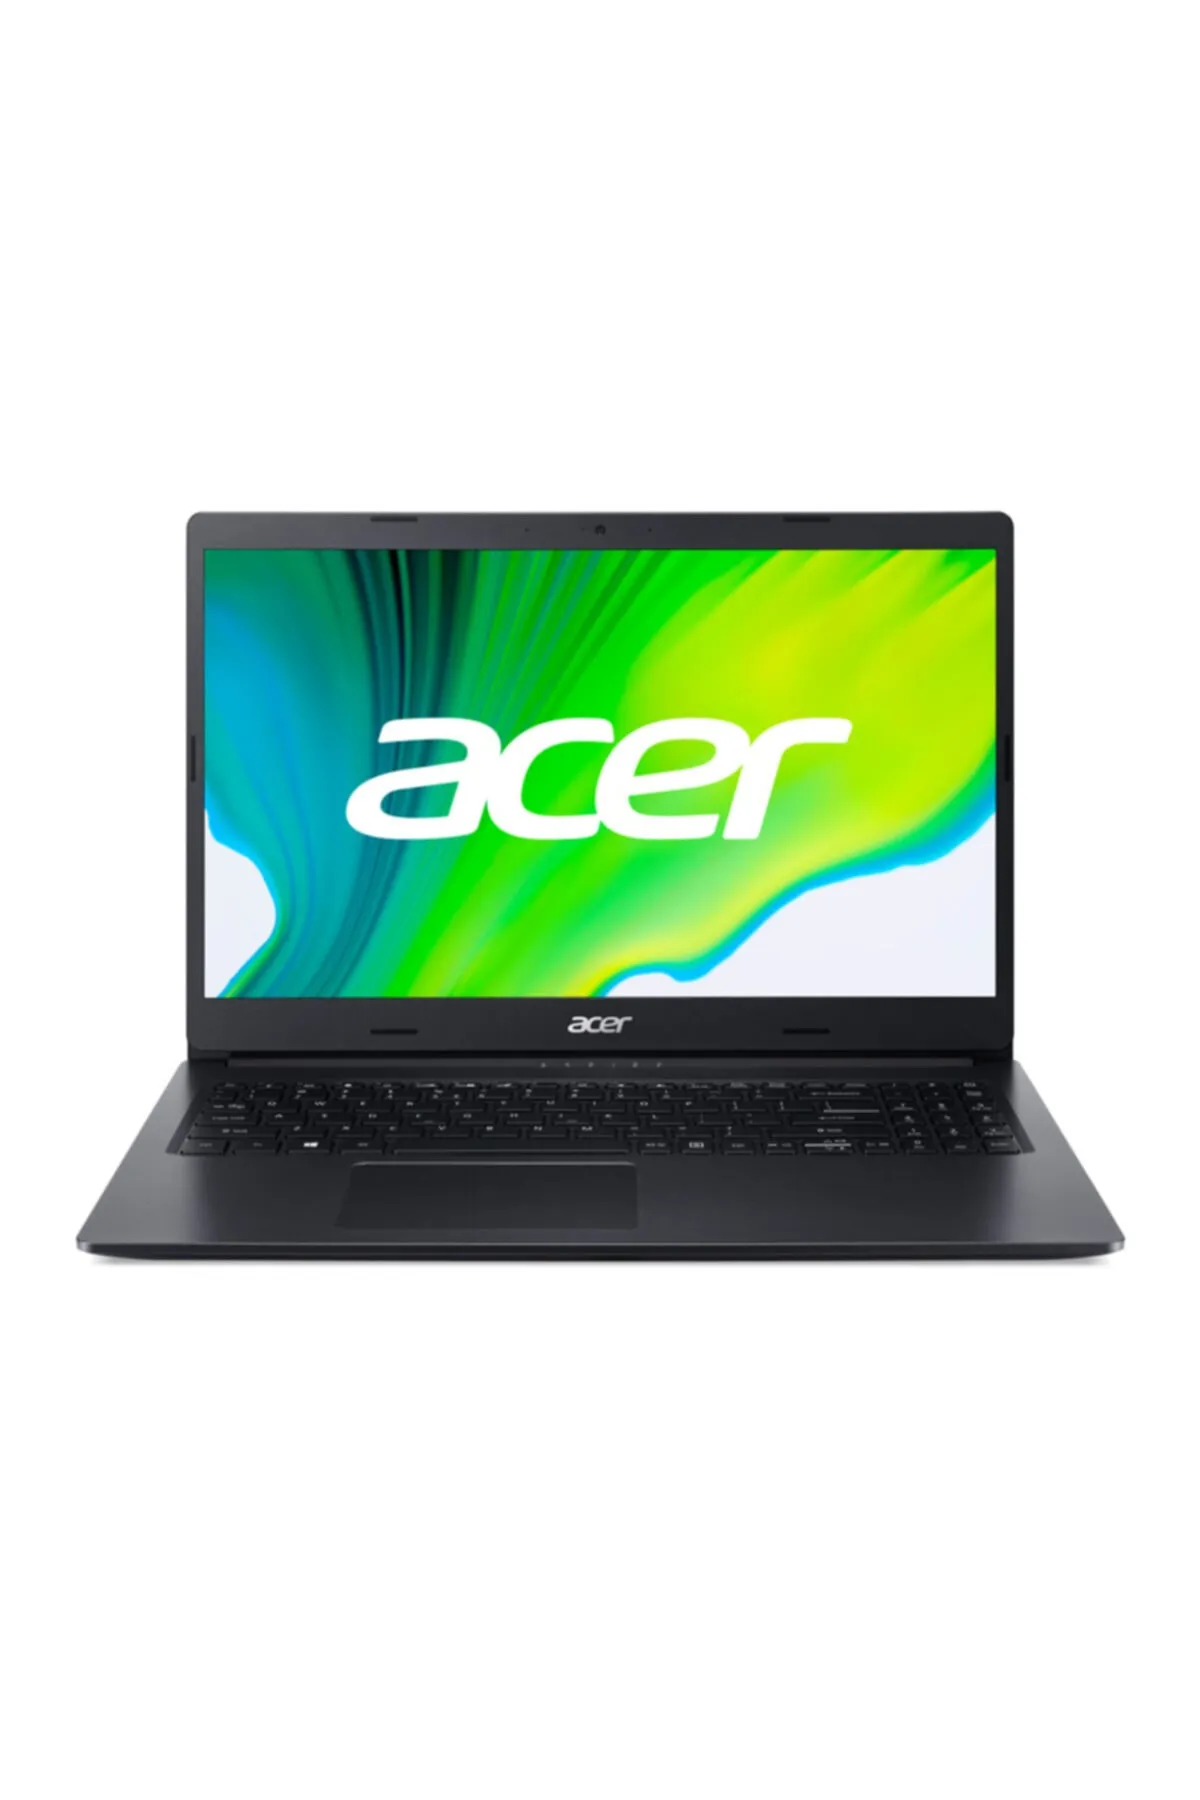 Acer Aspire 3 A317-52 Notebook